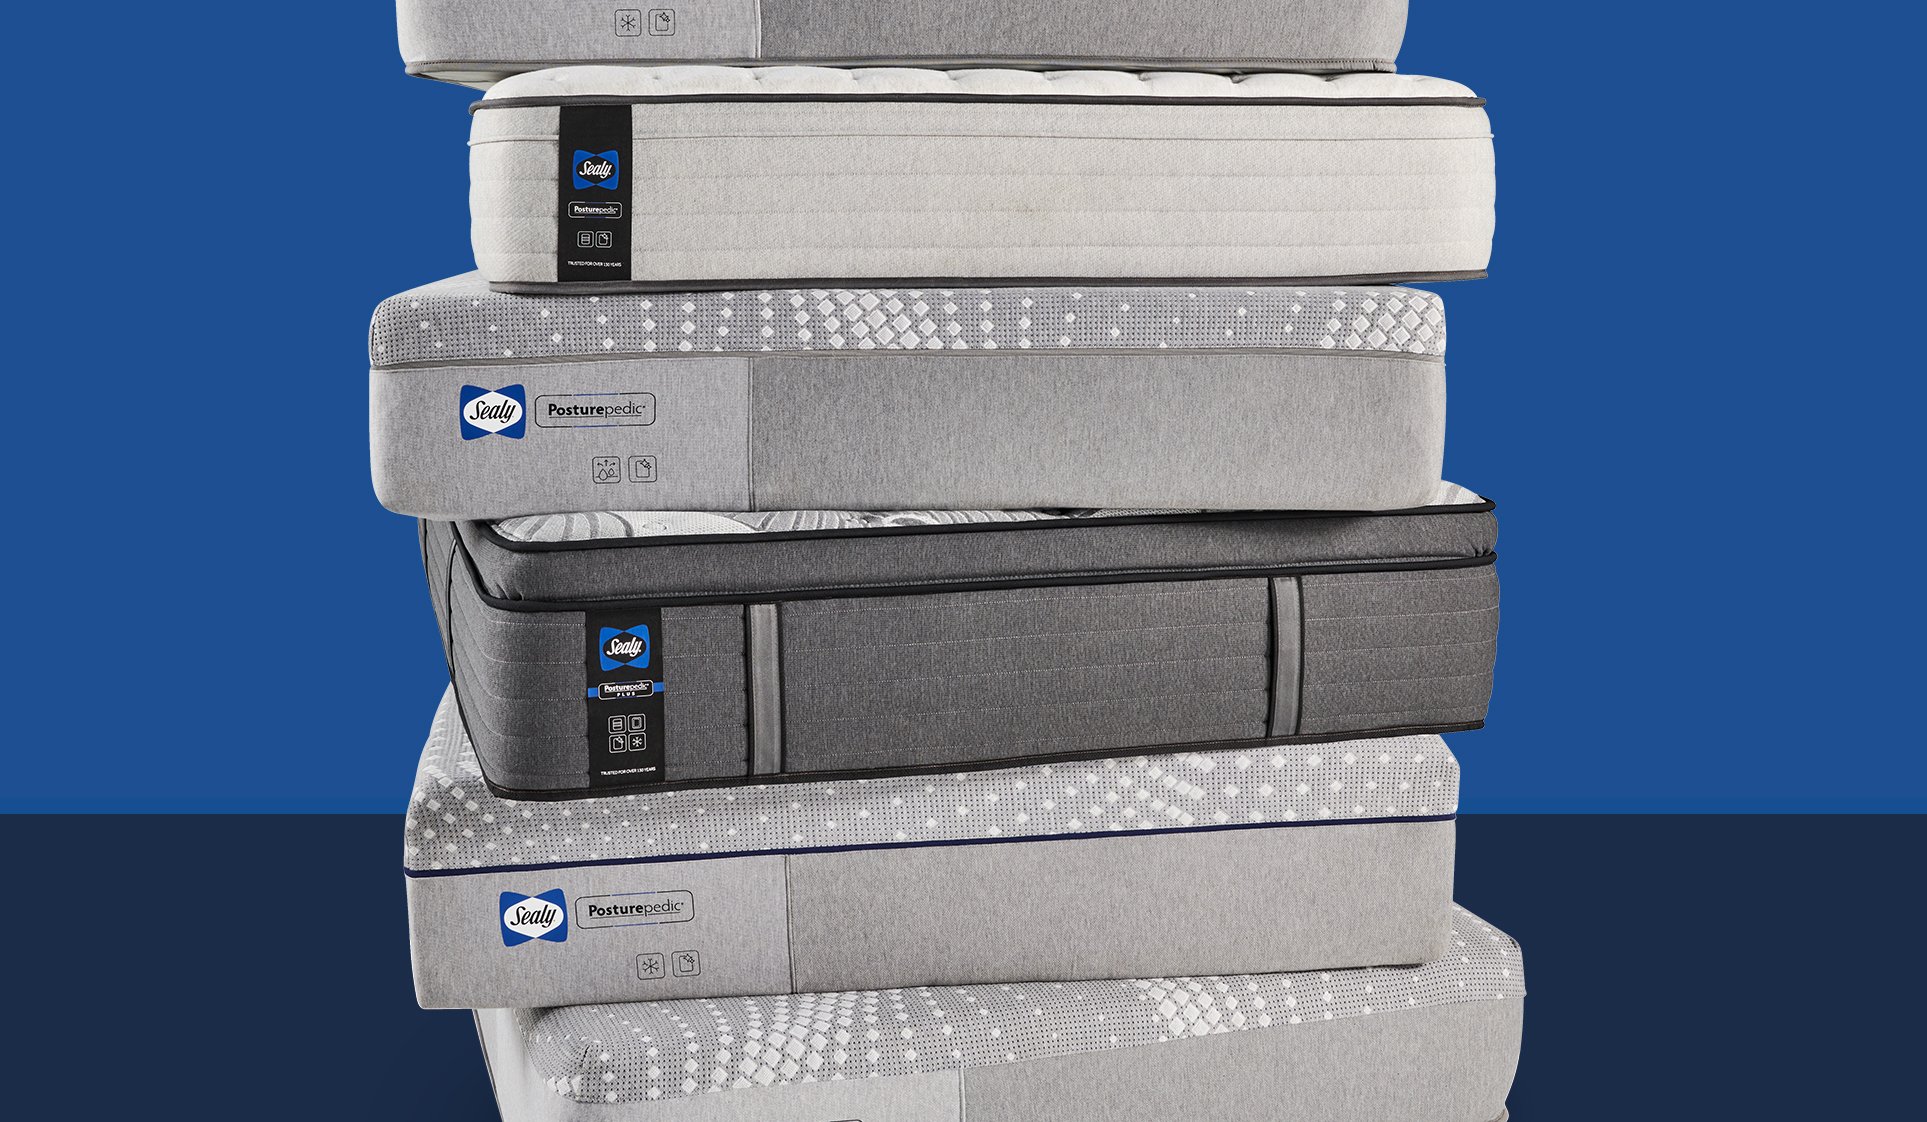 Mattress stack of Sealy<sup>®</sup> posturepedic mattresses